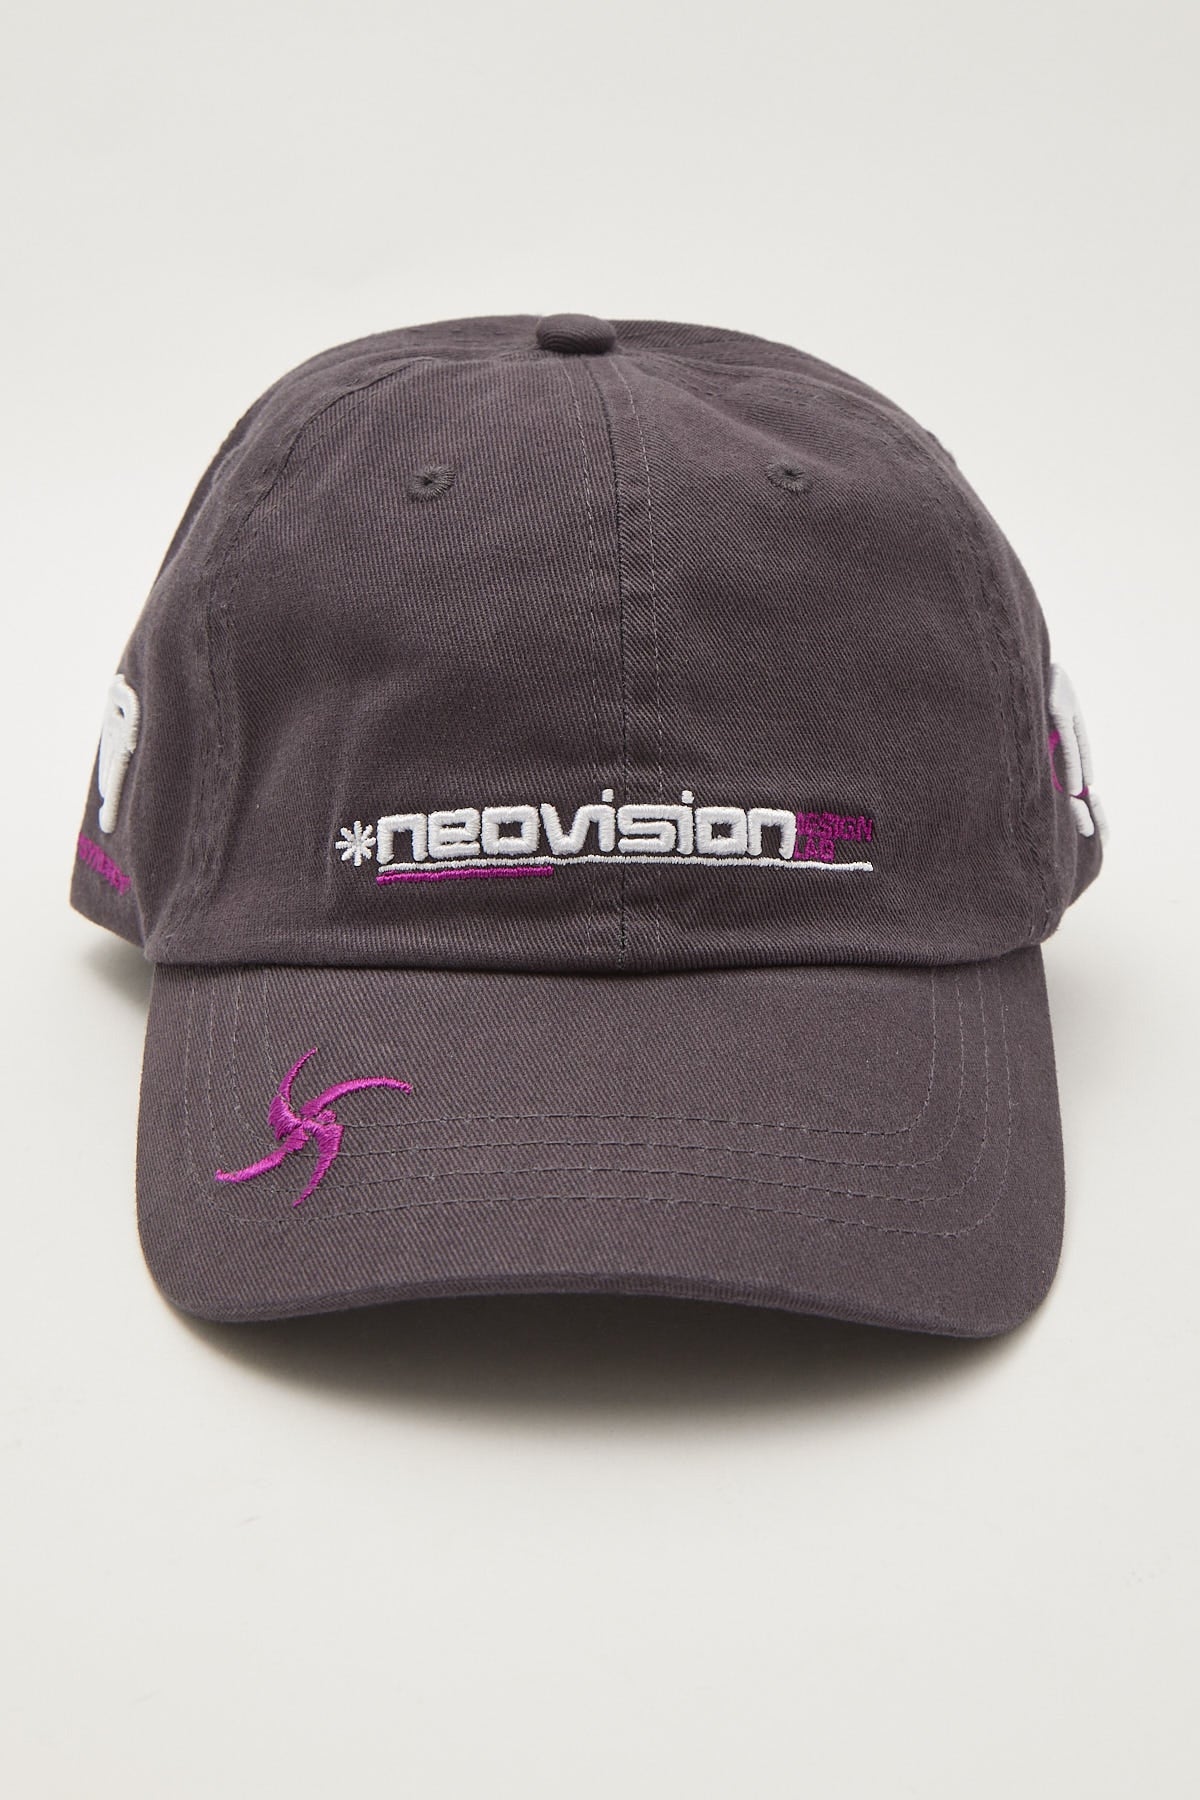 Neovision Synergy Dad Cap Off Black